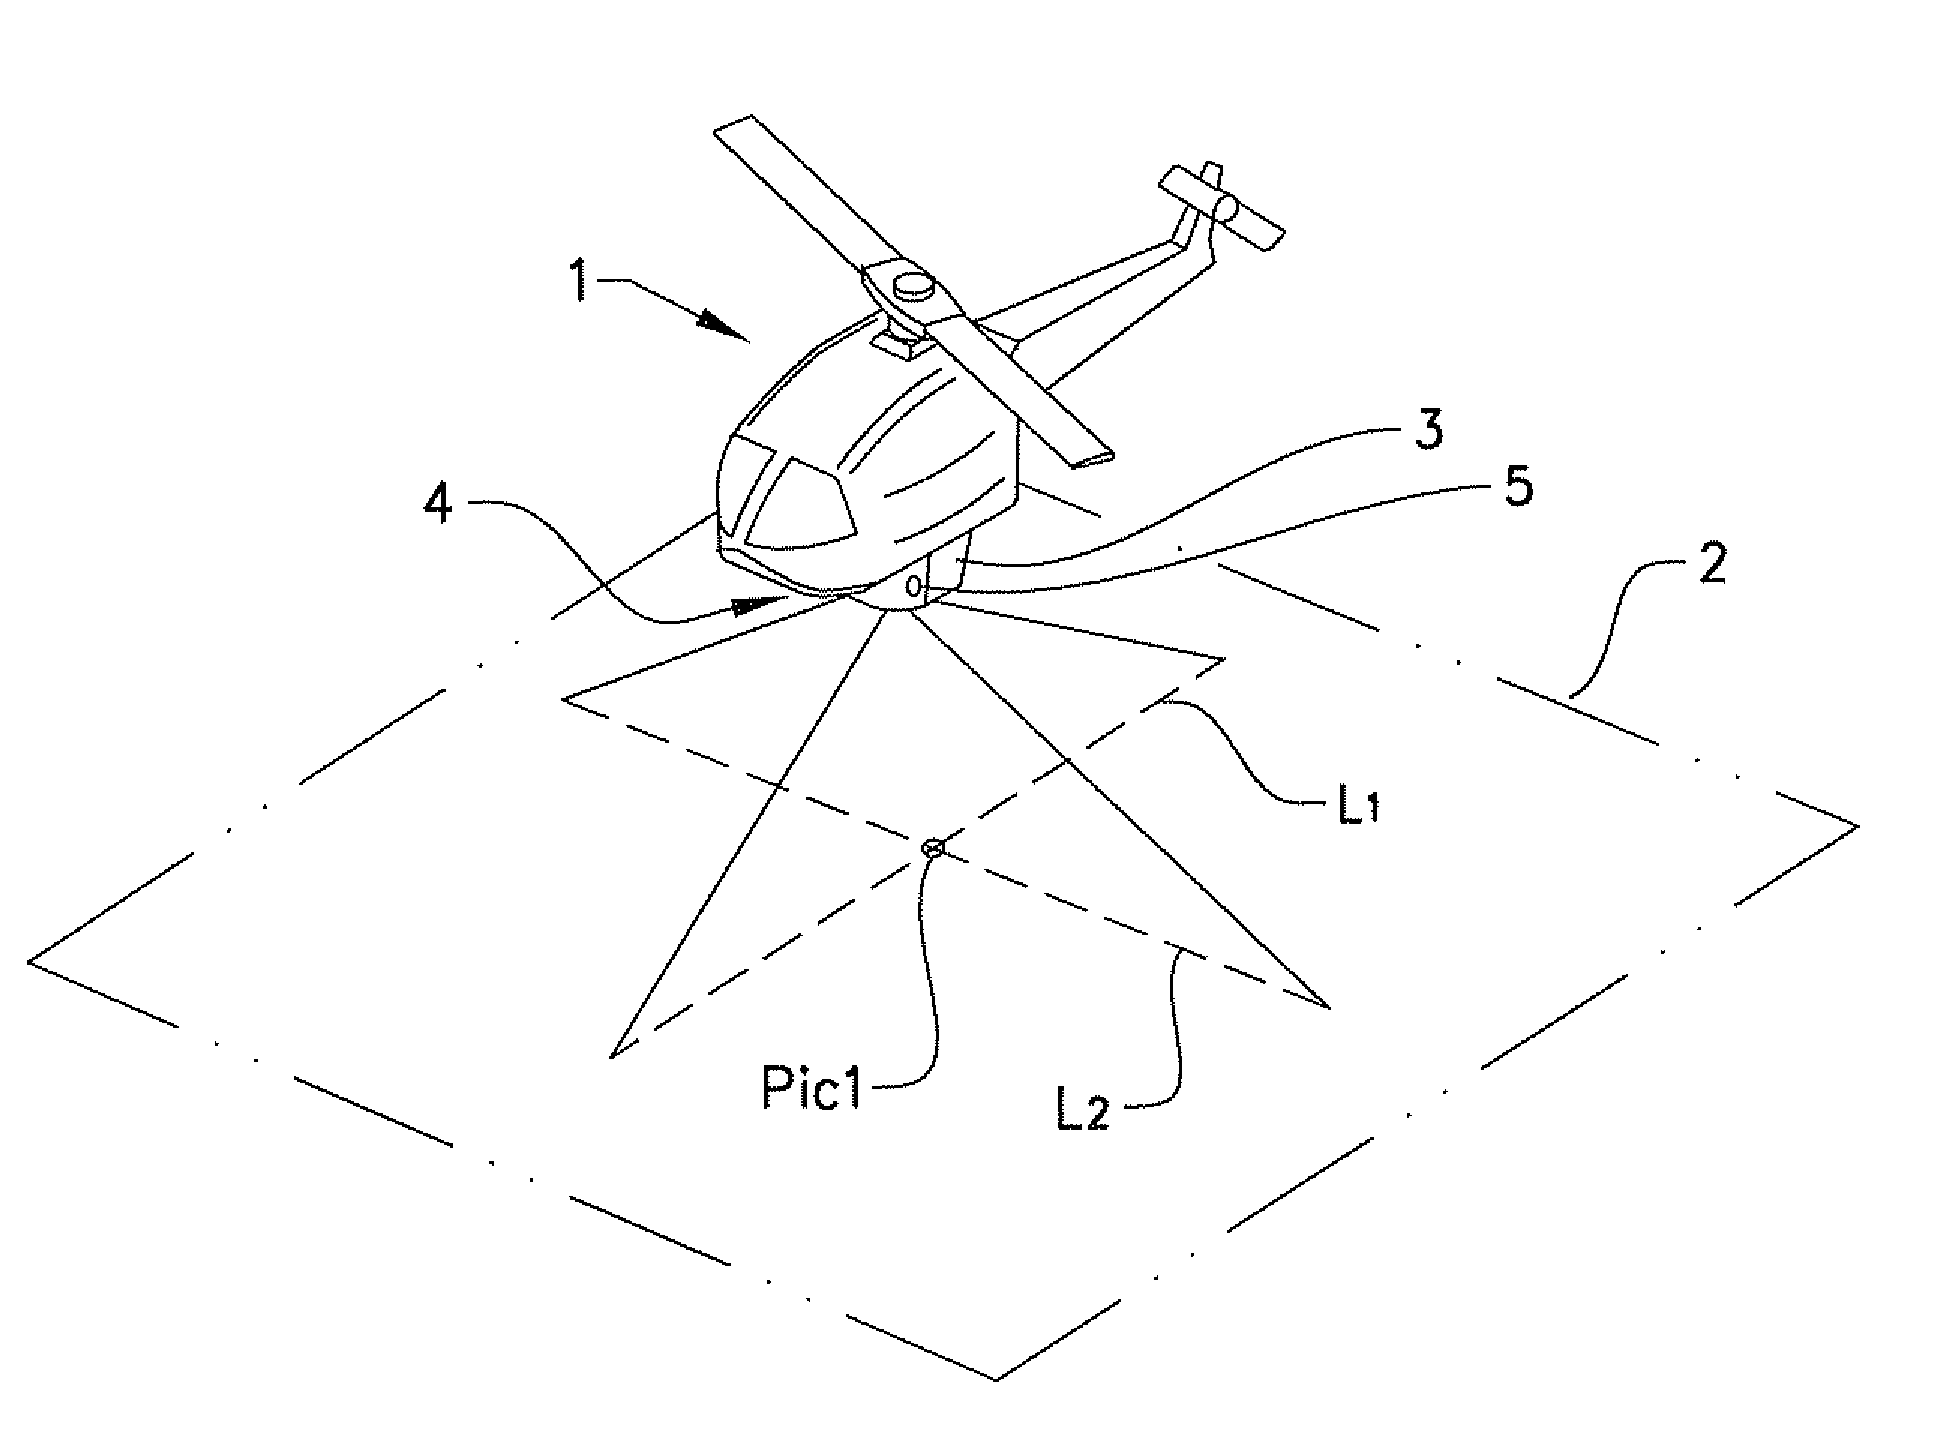 Measuring of a landing platform of a ship